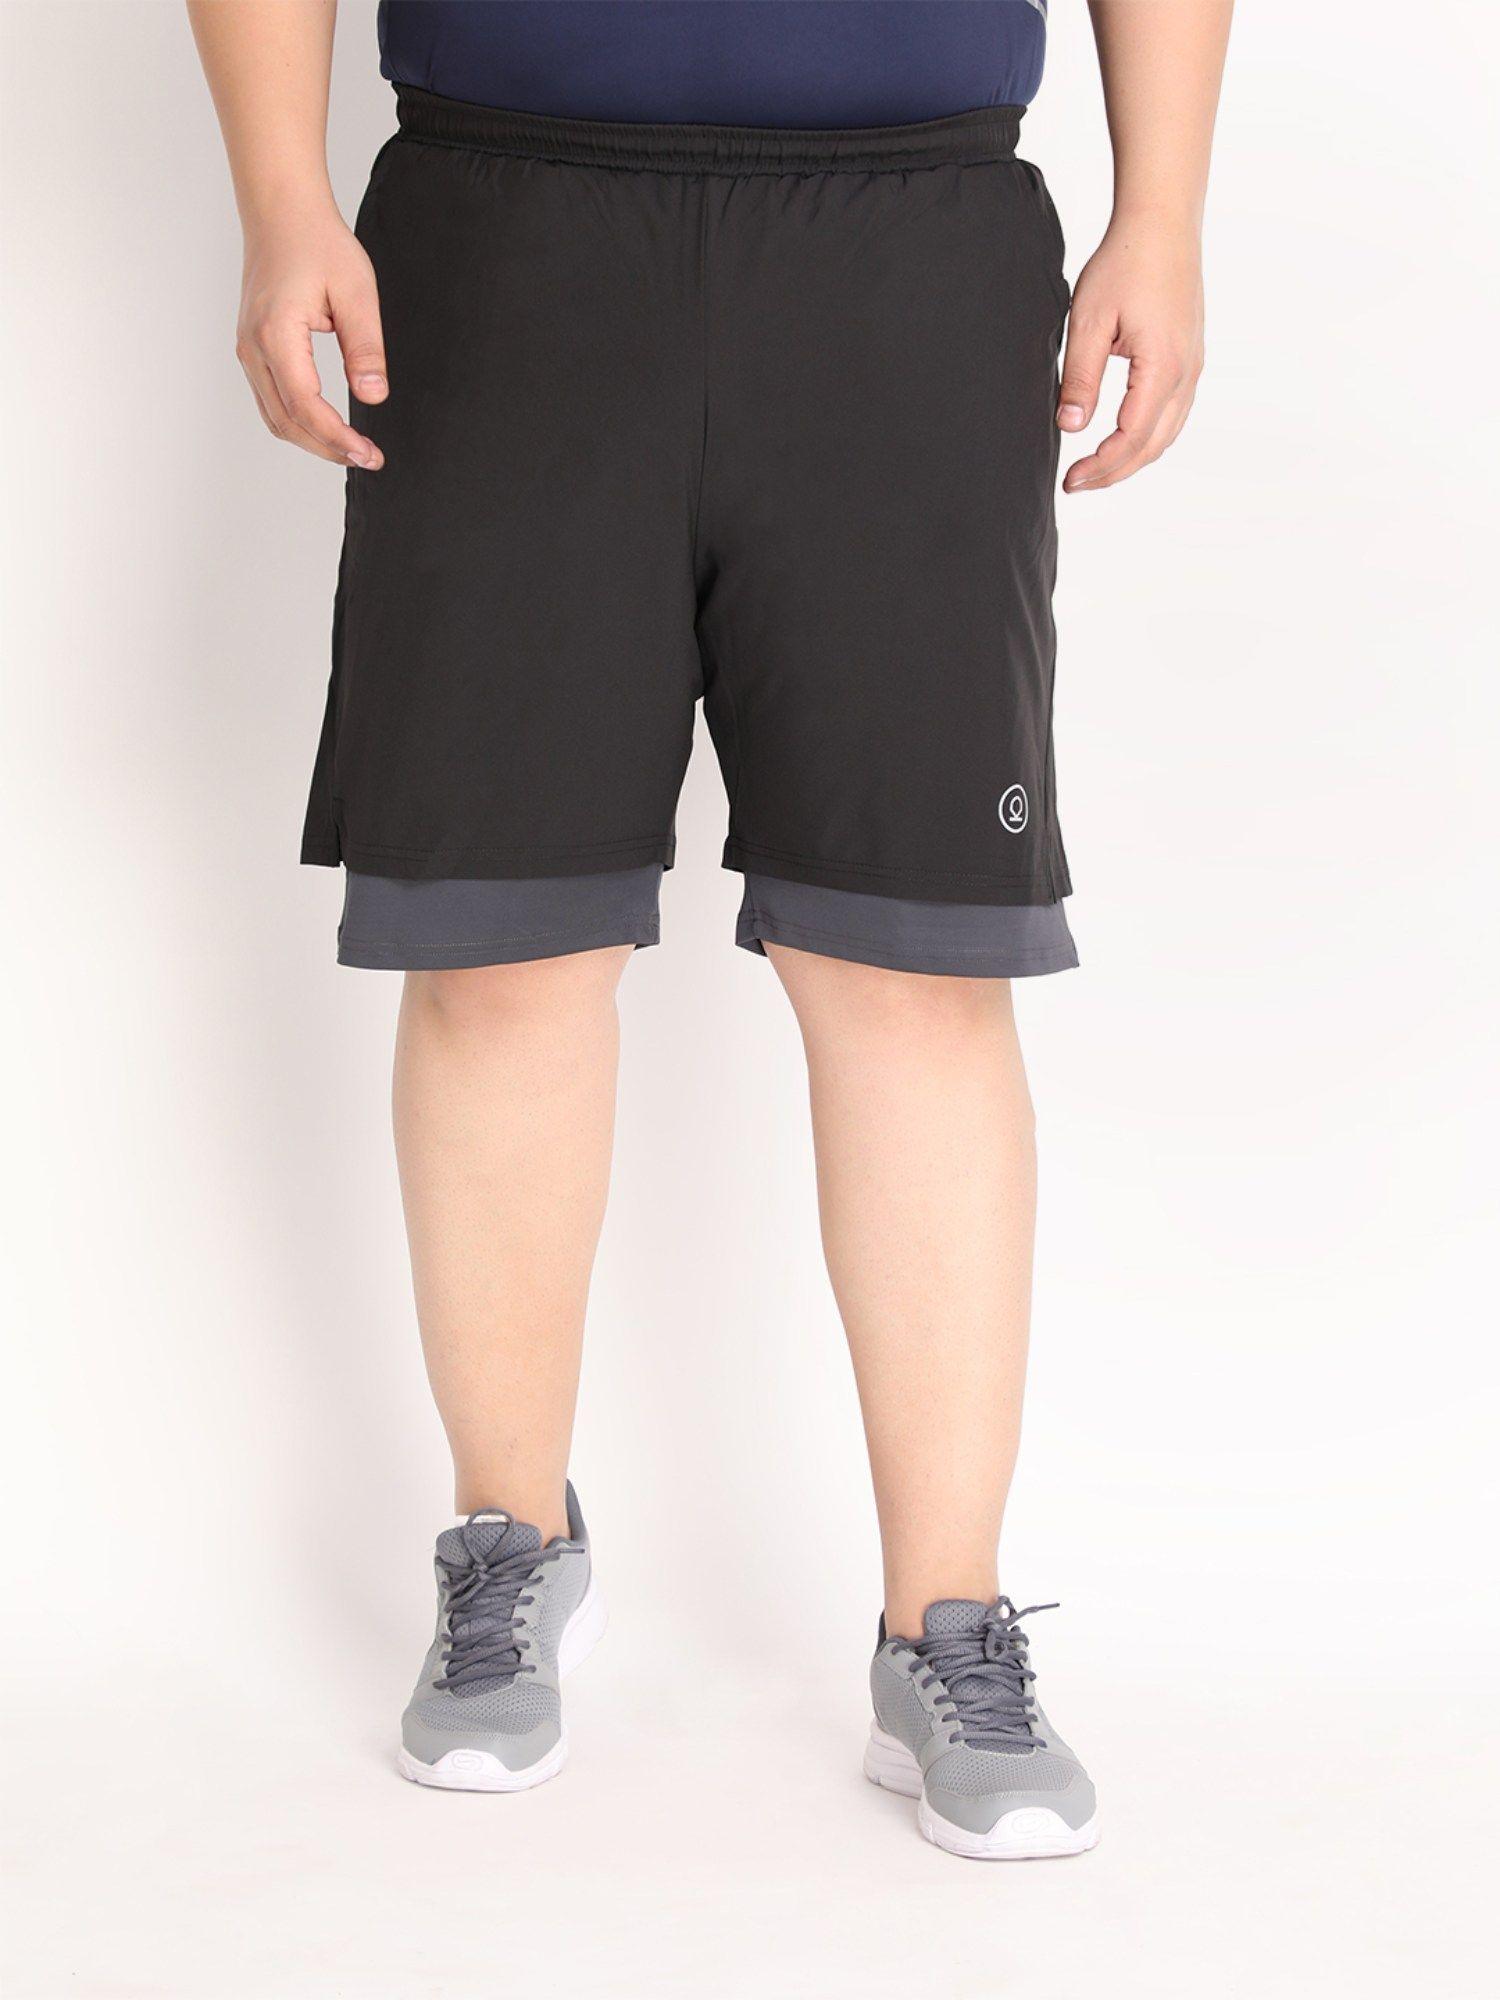 men-sports-workout-gym-shorts-basketball-in-black